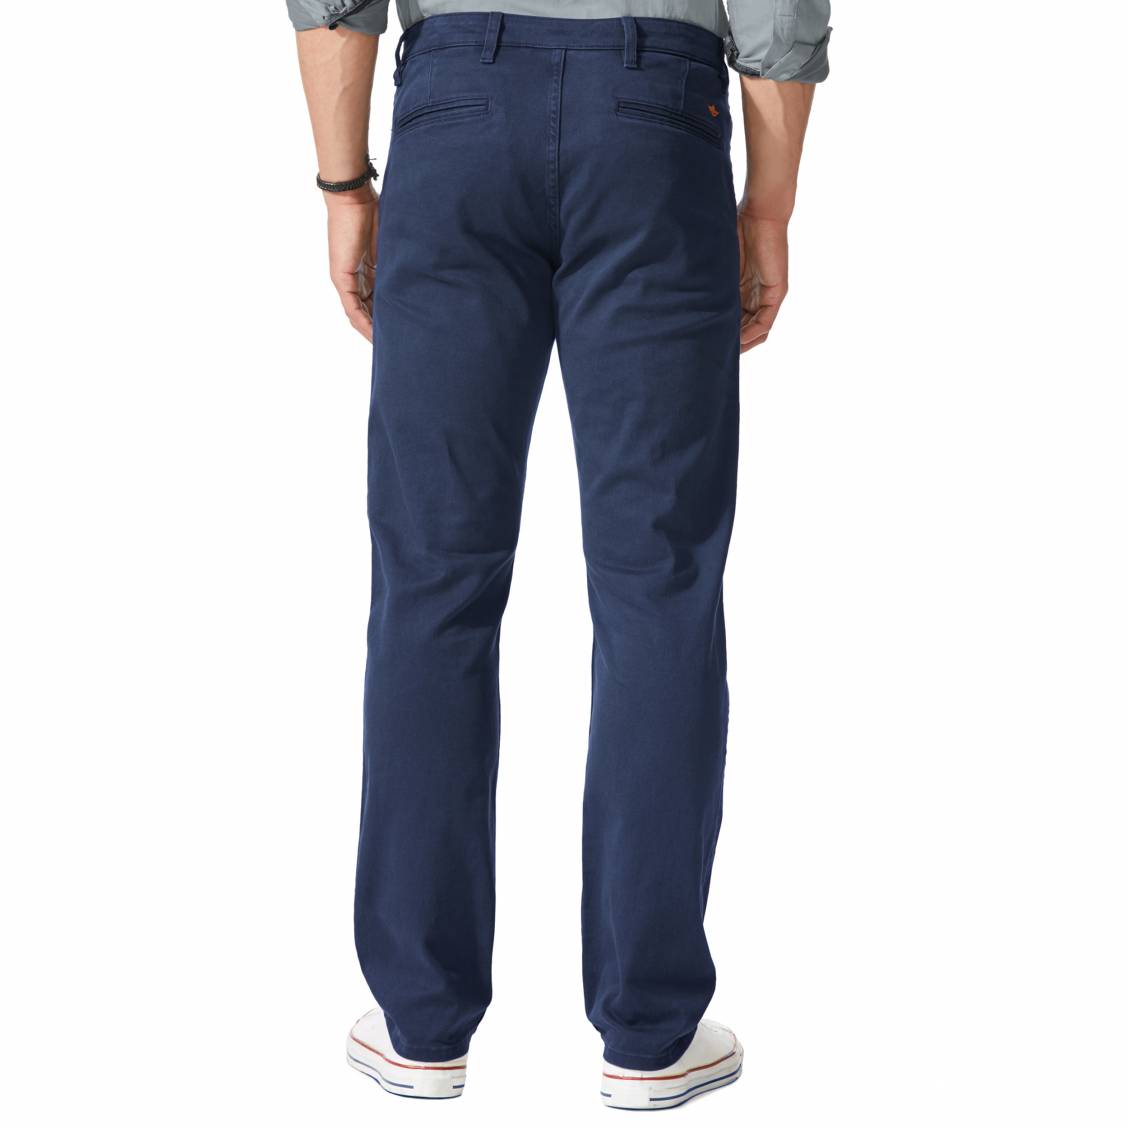 — g01 Dockers Homme 30-Husky kaki Uniforme Pantalon-Bleu marine-neuf avec étiquettes 